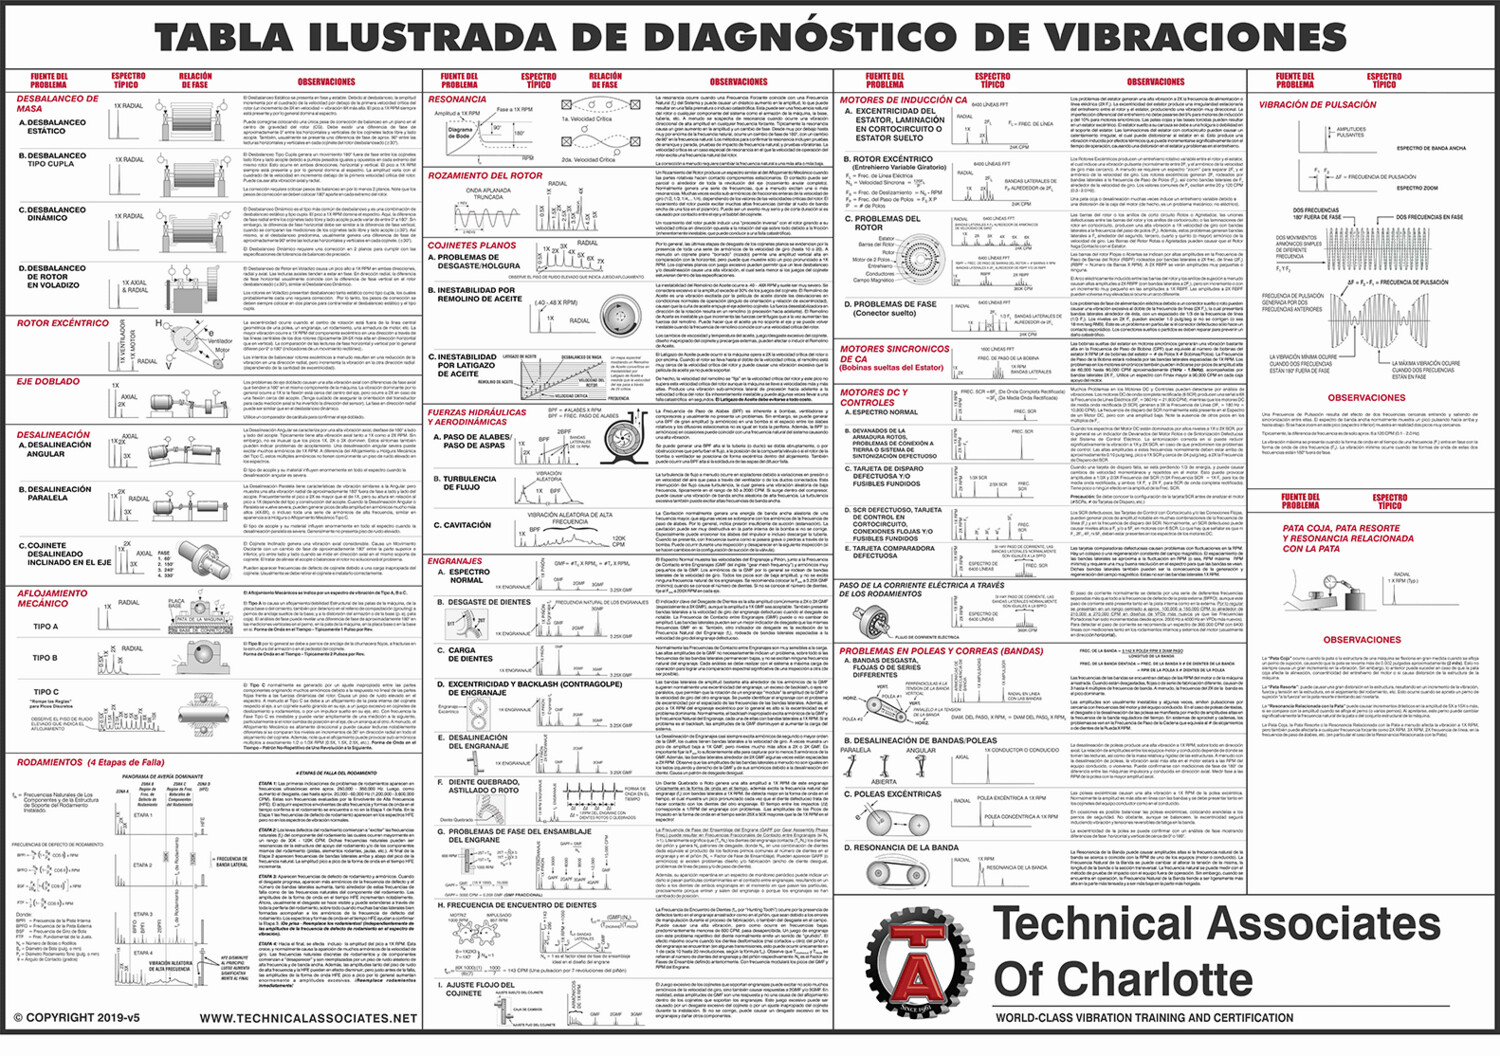 Wall Chart - Vibration Diagnostic (Spanish Language Version)